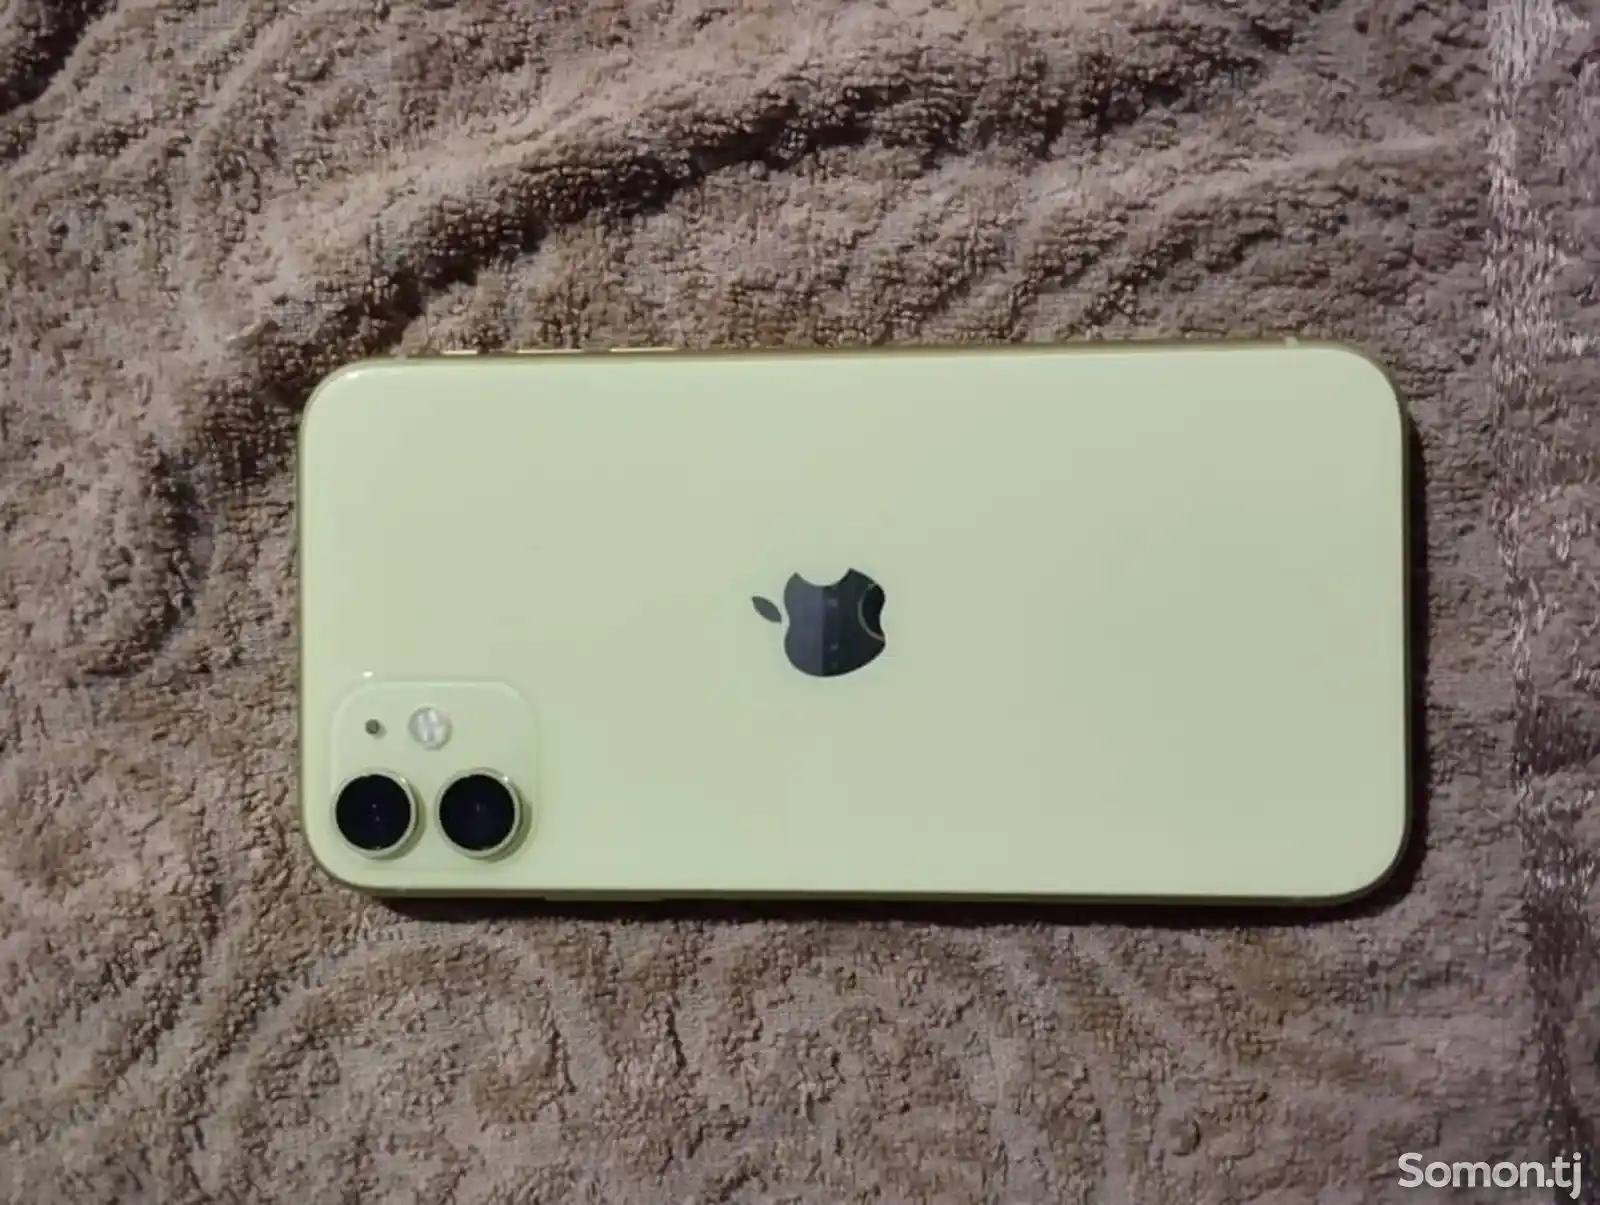 Apple iPhone 11, 128 gb, Yellow-2